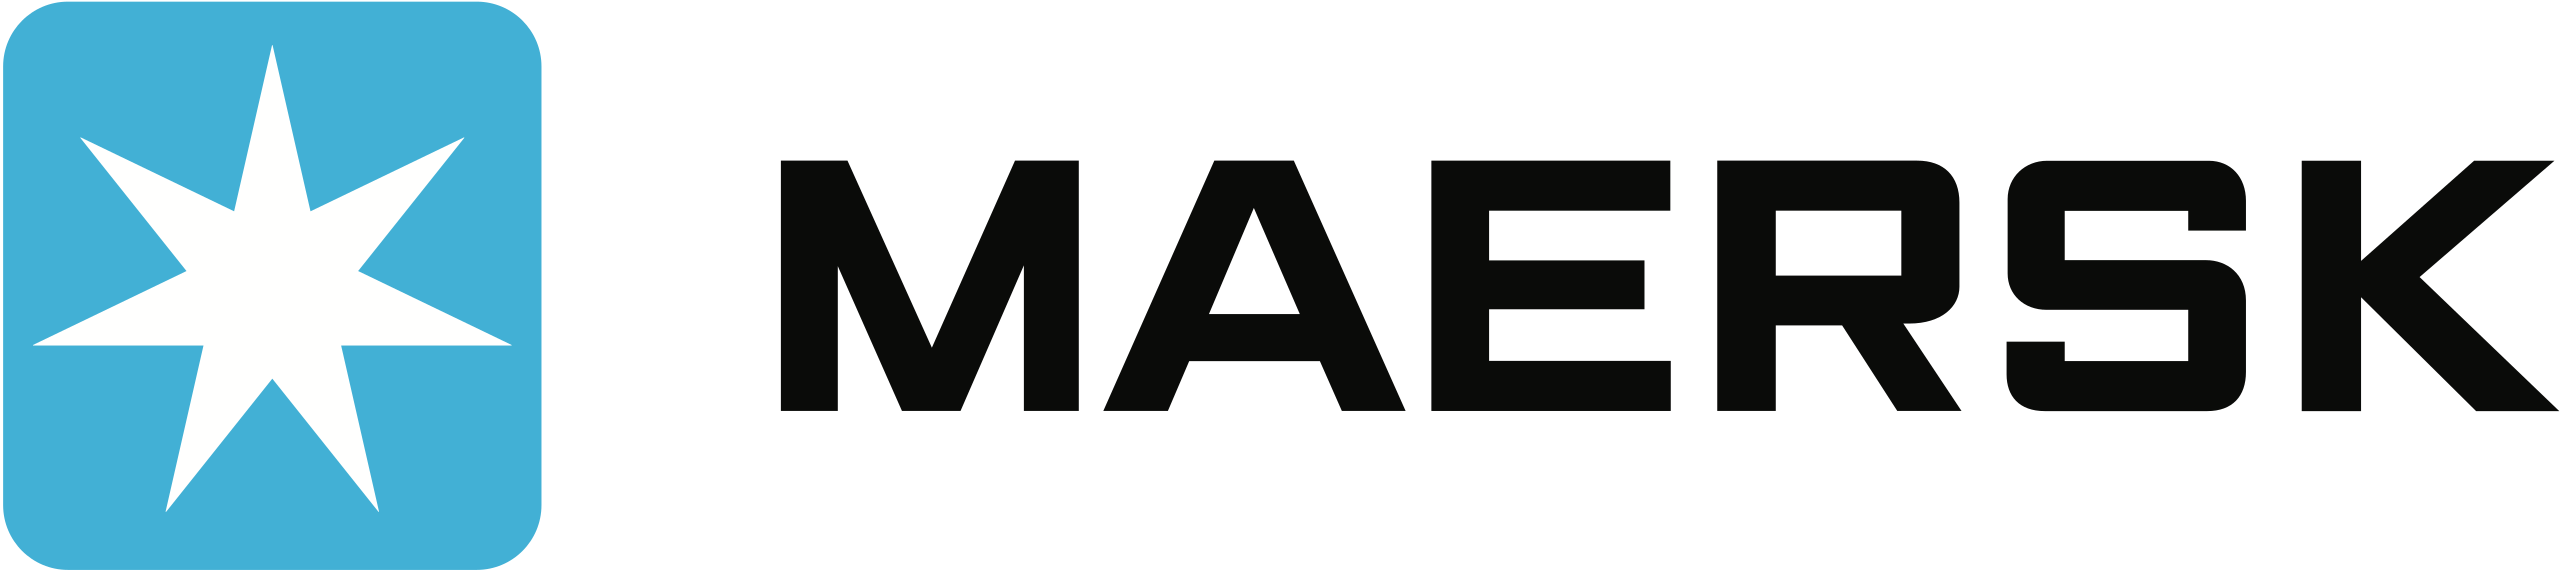 Maersk Group Logo